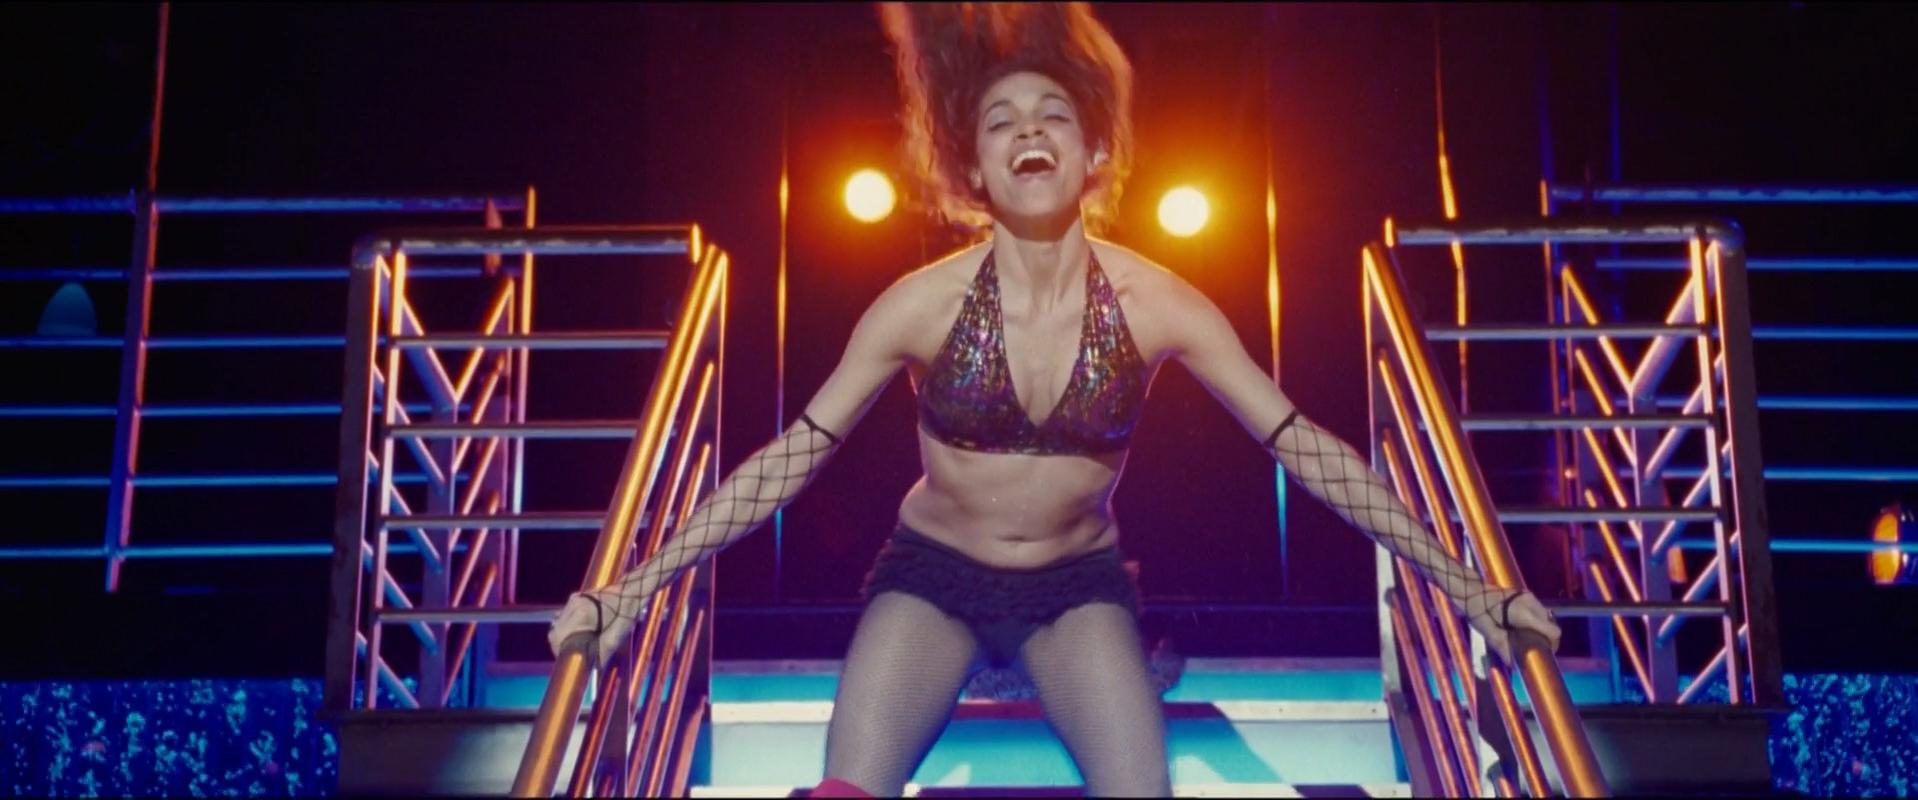 Nude video celebs Â» Rosario Dawson sexy, Idina Menzel nude ...